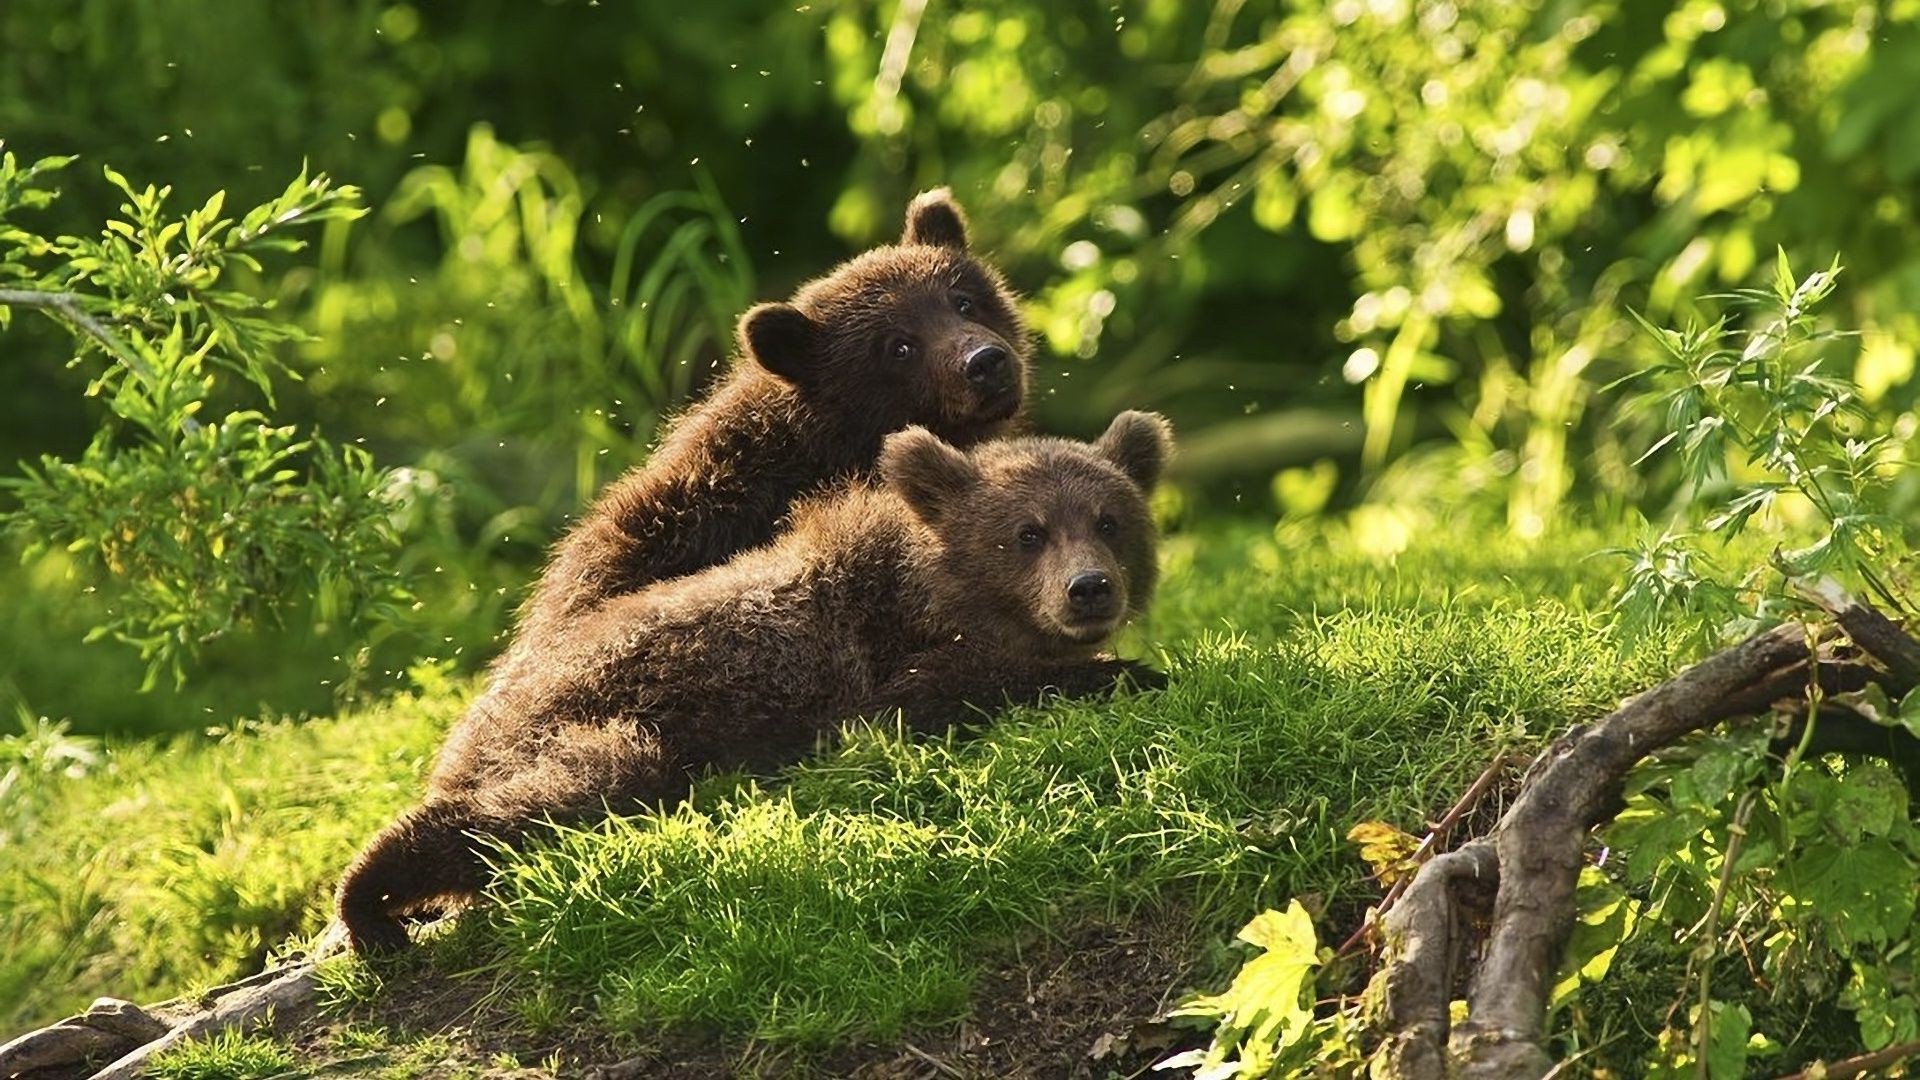 bears mammal wildlife nature grass outdoors wild animal fur wood park cute